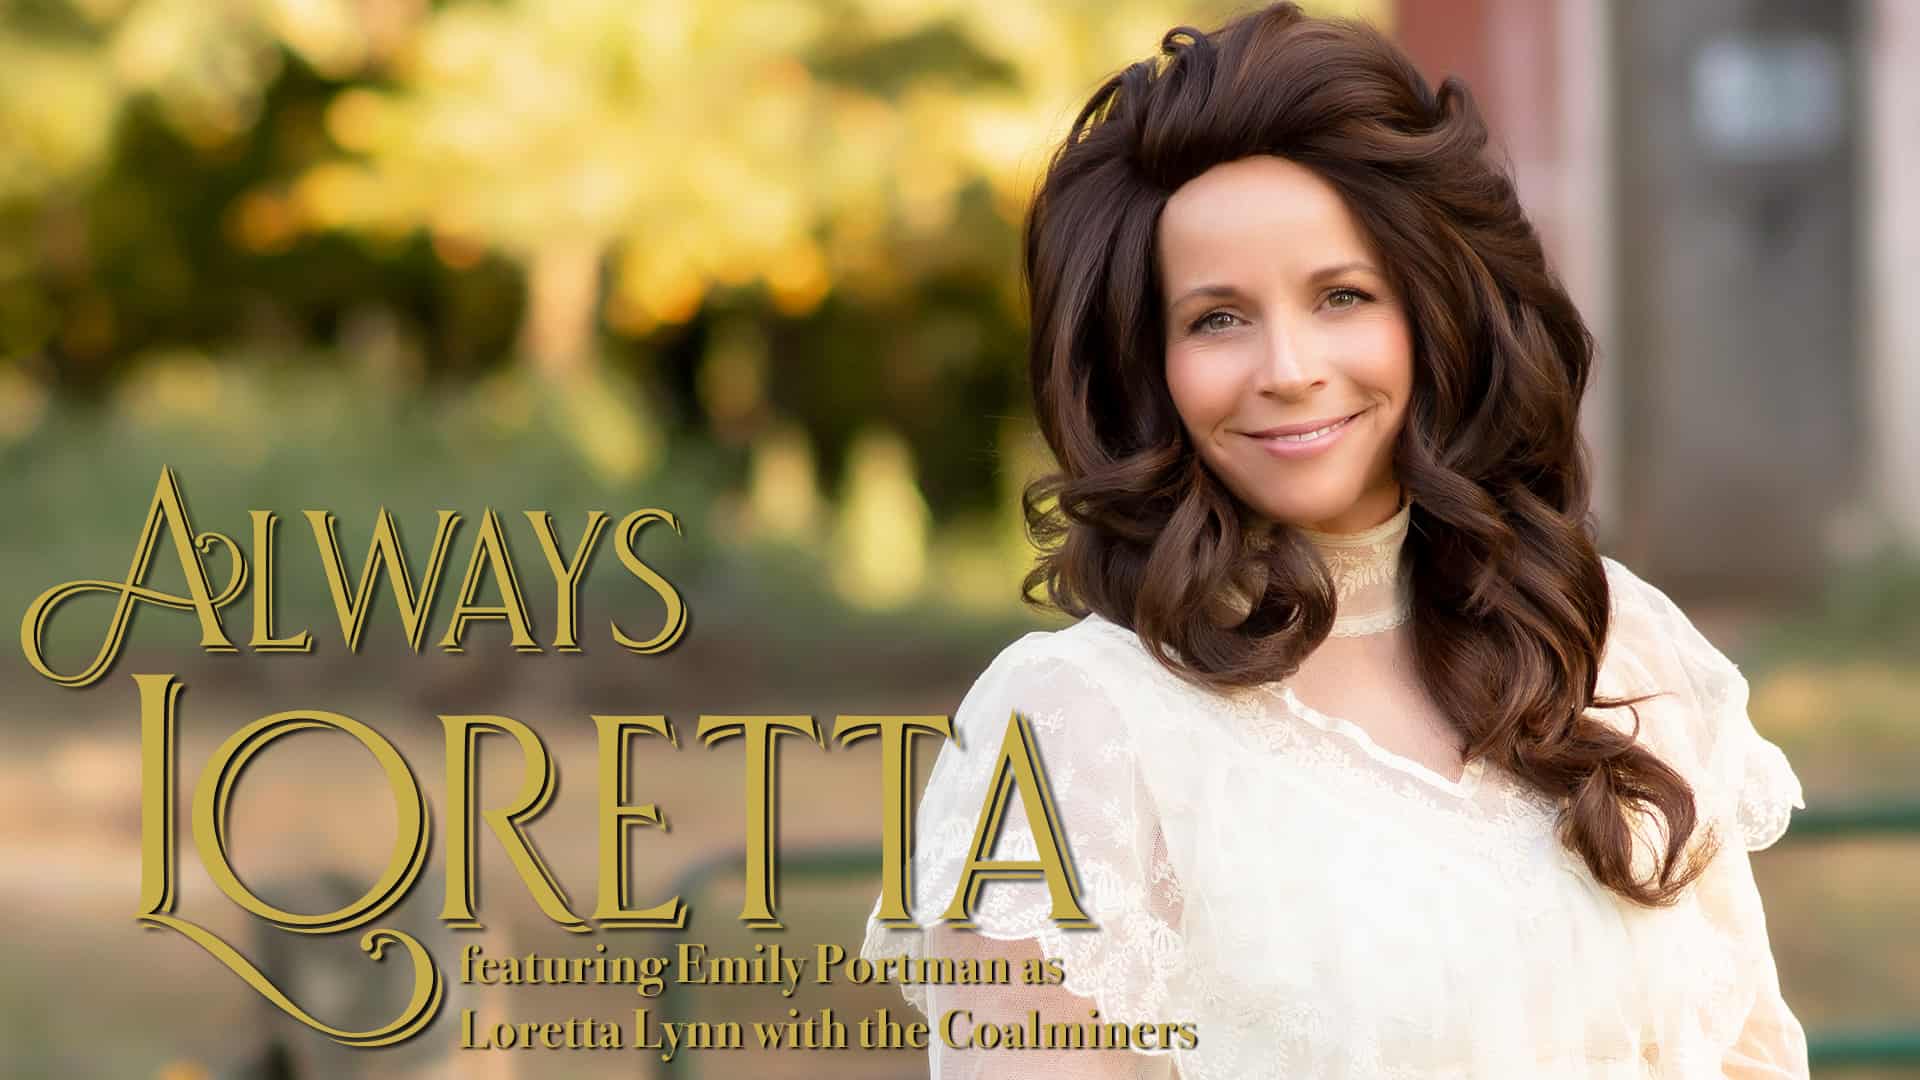 Always Loretta featuring Emily Portman as Loretta Lynn with the Coalminers